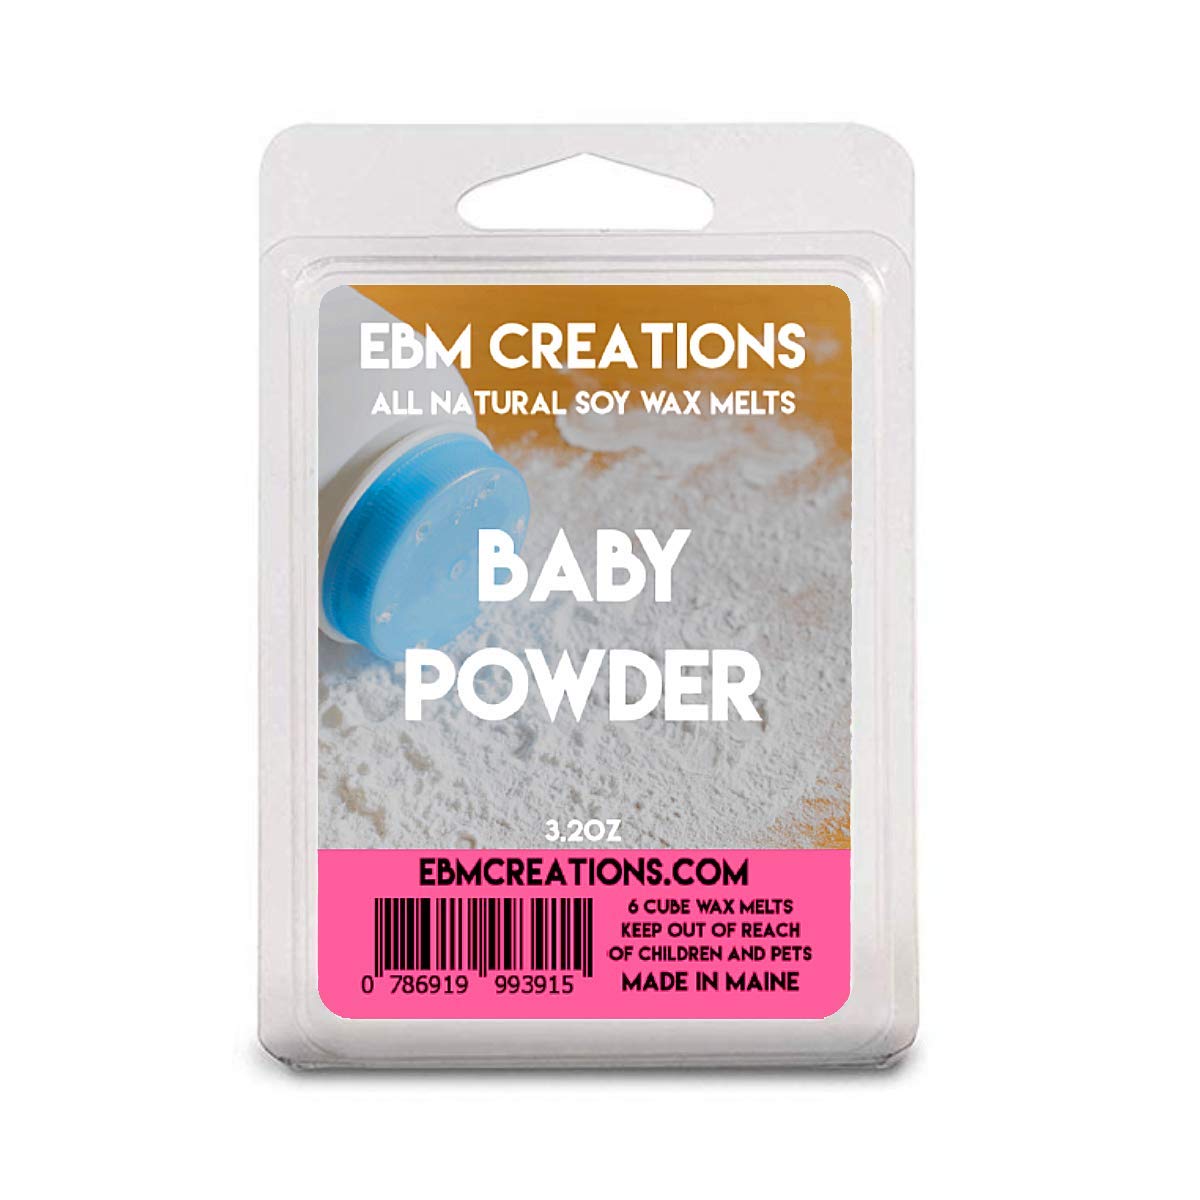 Baby Powder - 3.2 oz Clamshell